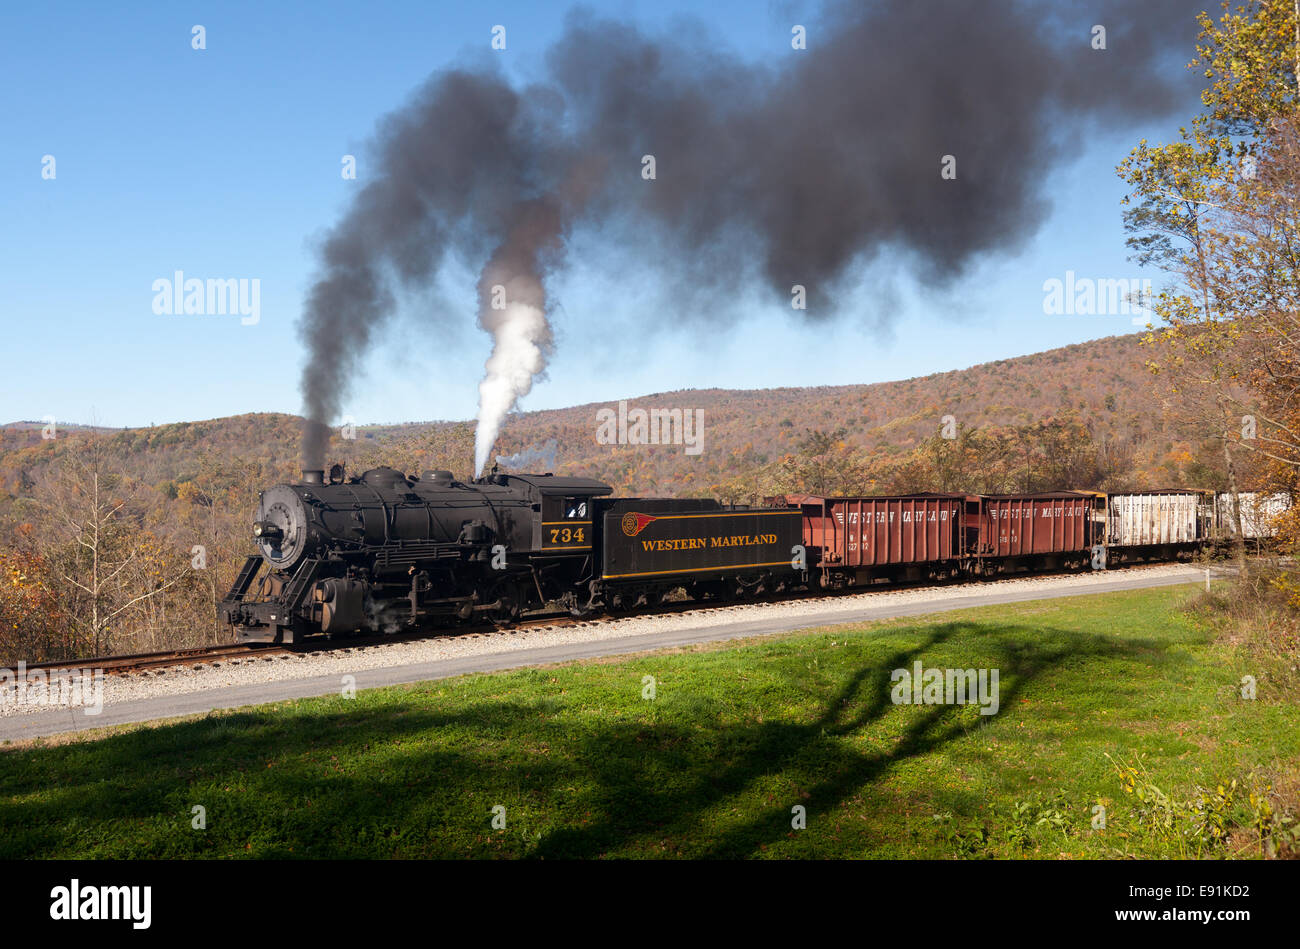 WM Steam train powers along railway Stock Photo